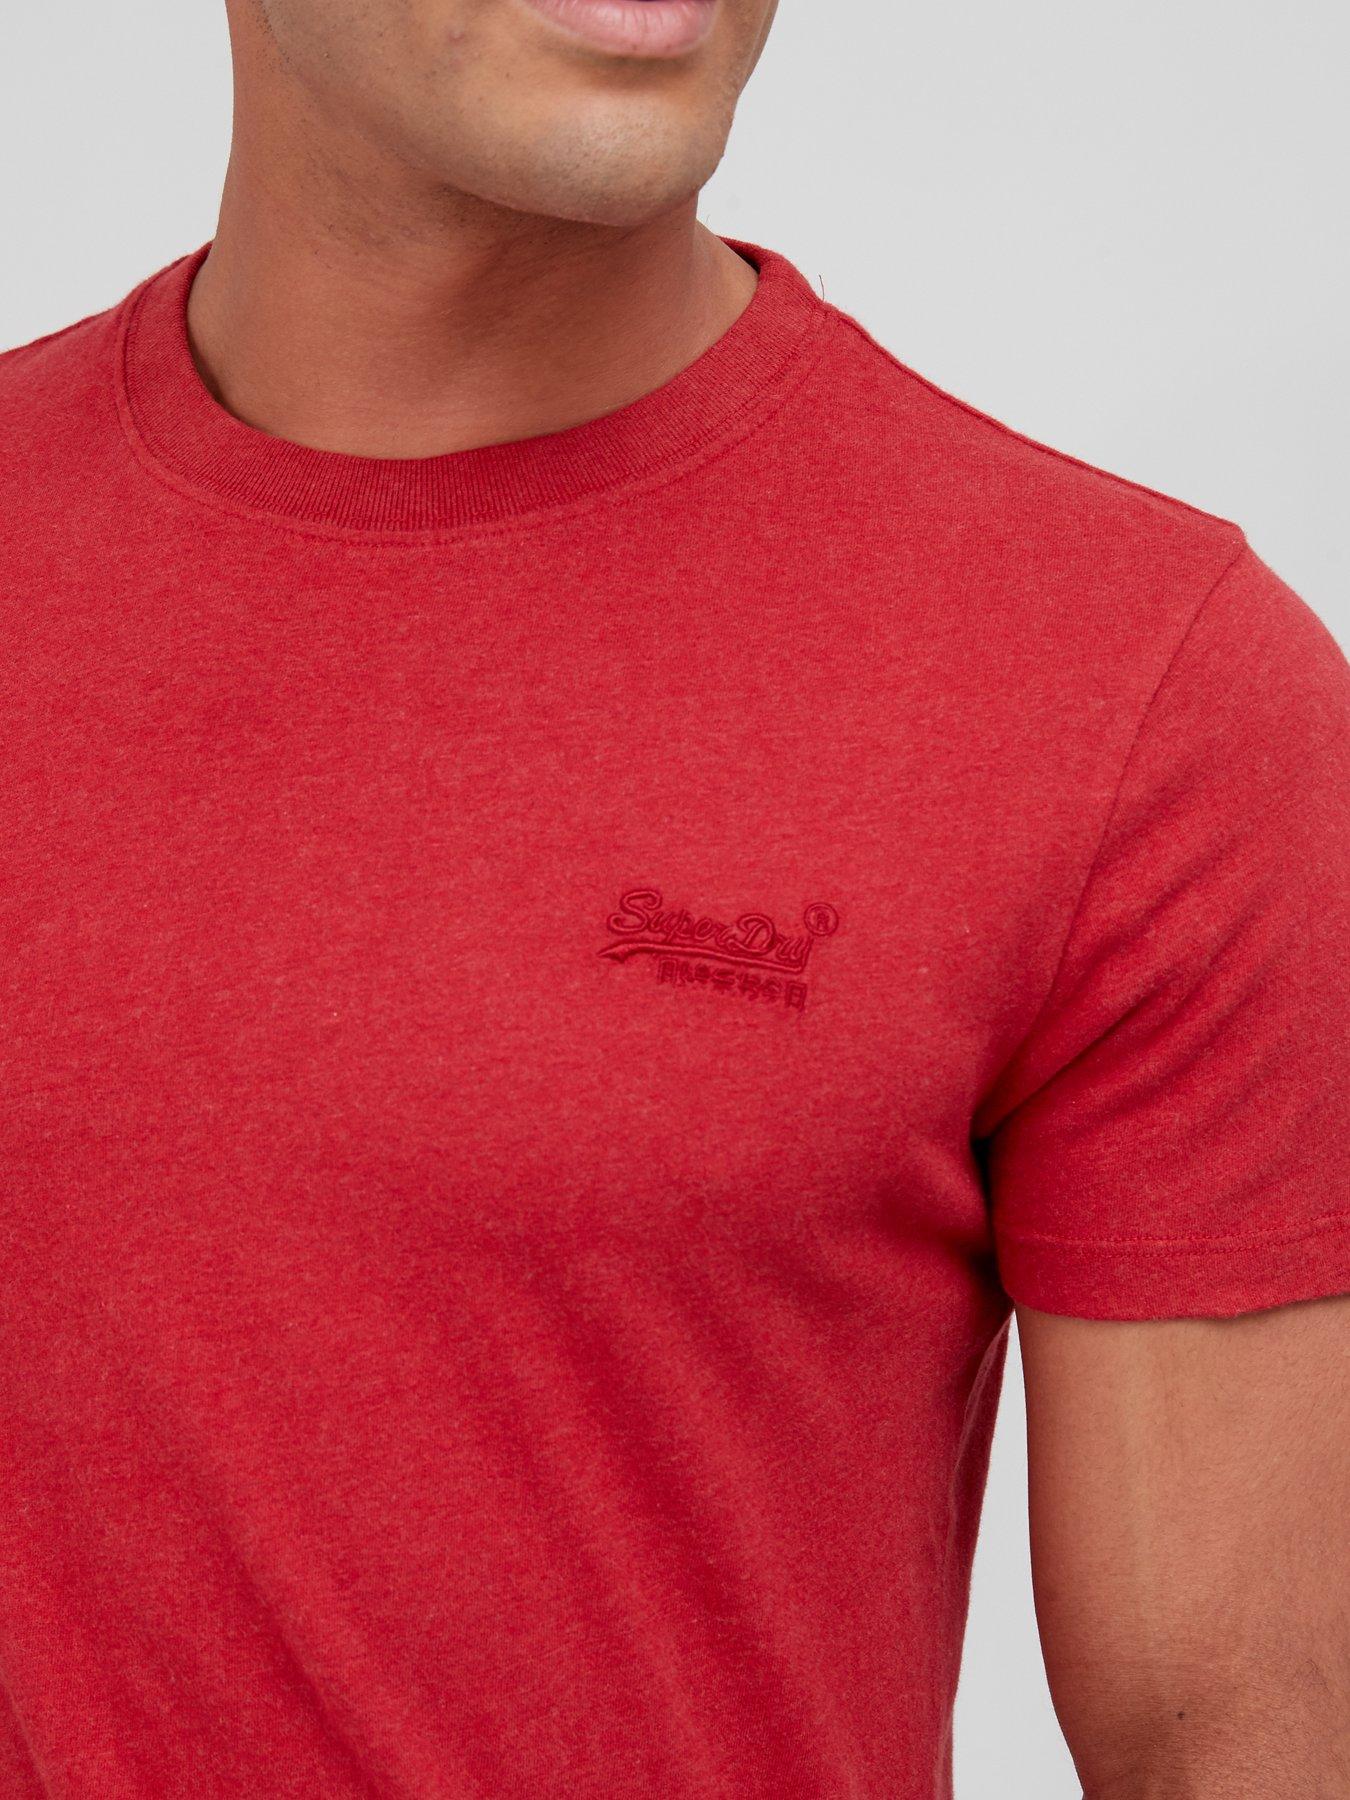 Superdry Vintage Logo Embroidered T-Shirt - Red Marl